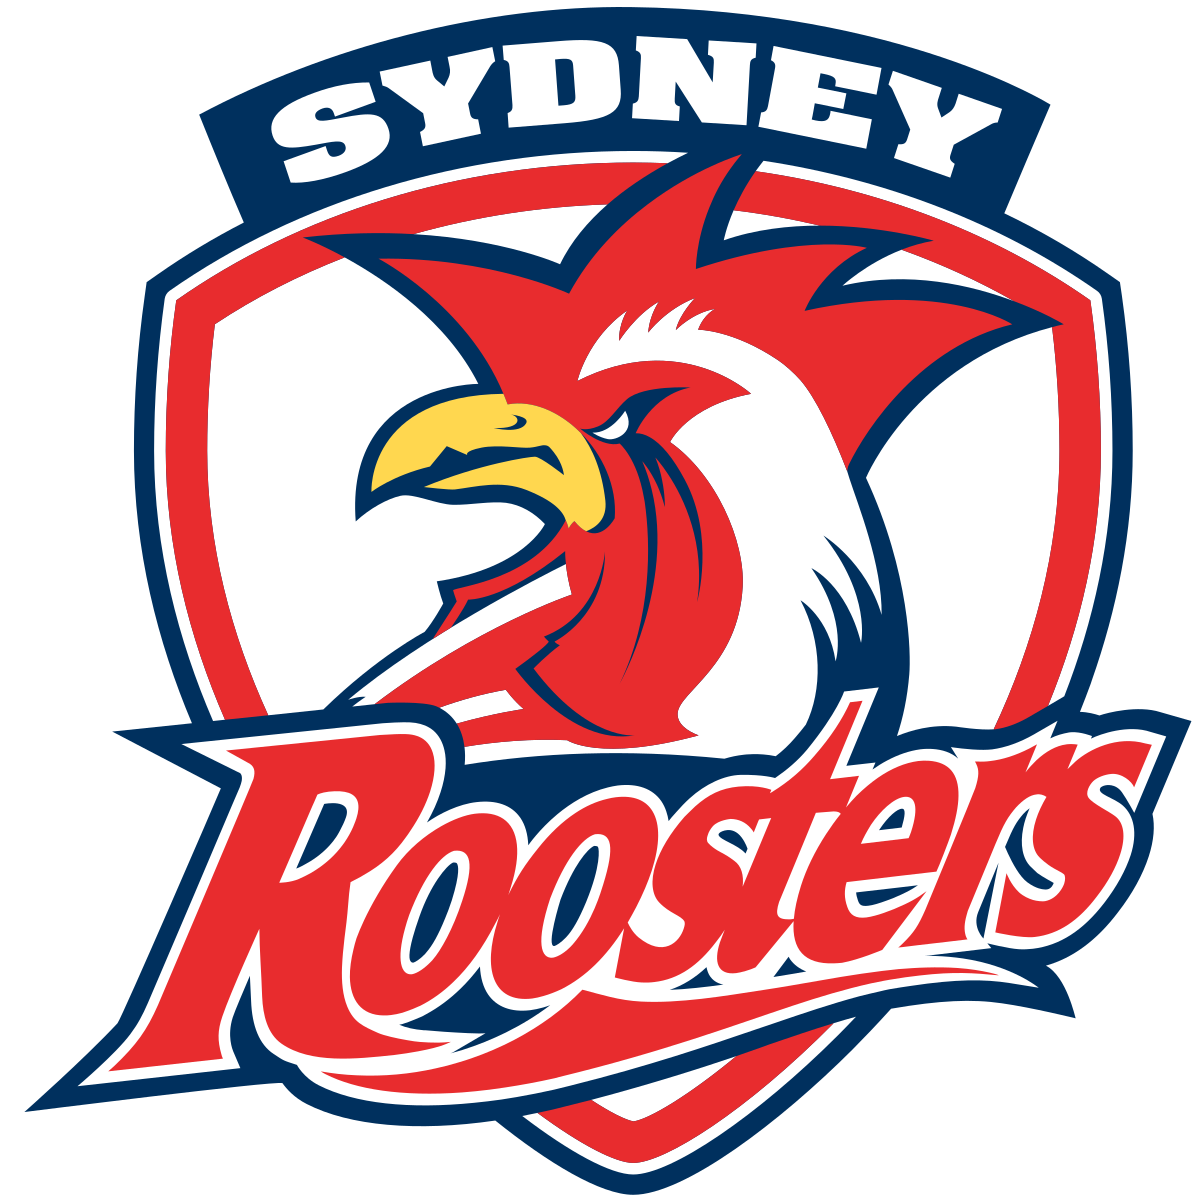 Image result for sydney roosters logo